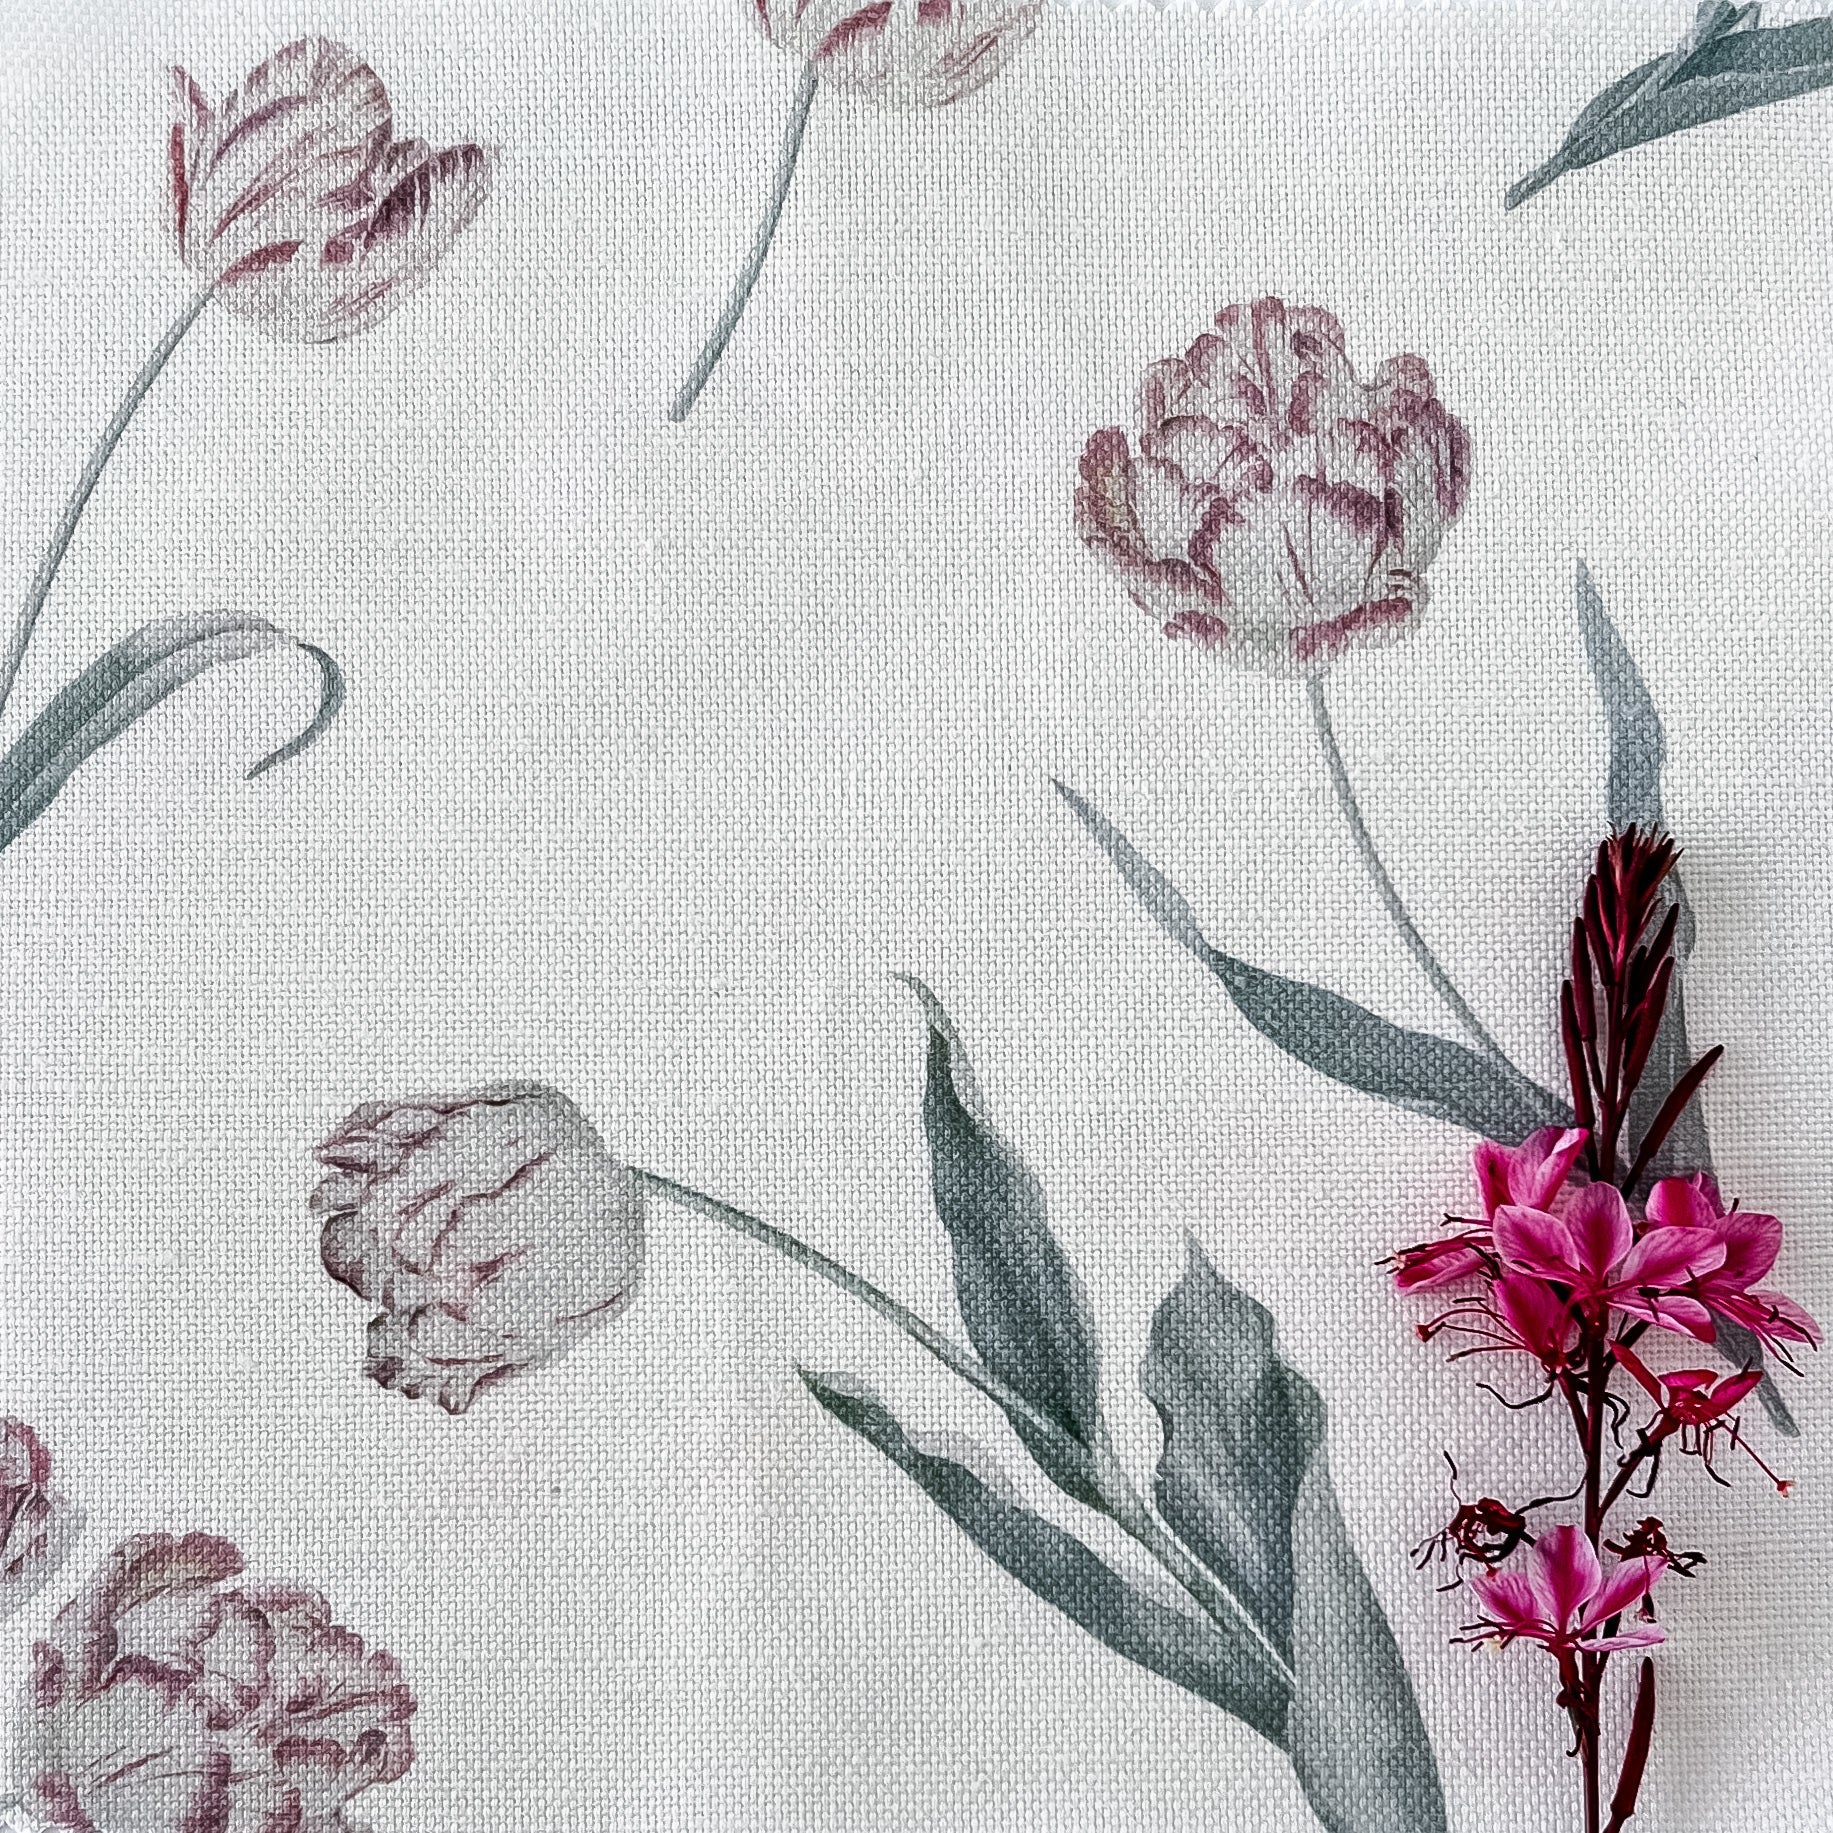 Tulips Fabric - Pink - Hydrangea Lane Home